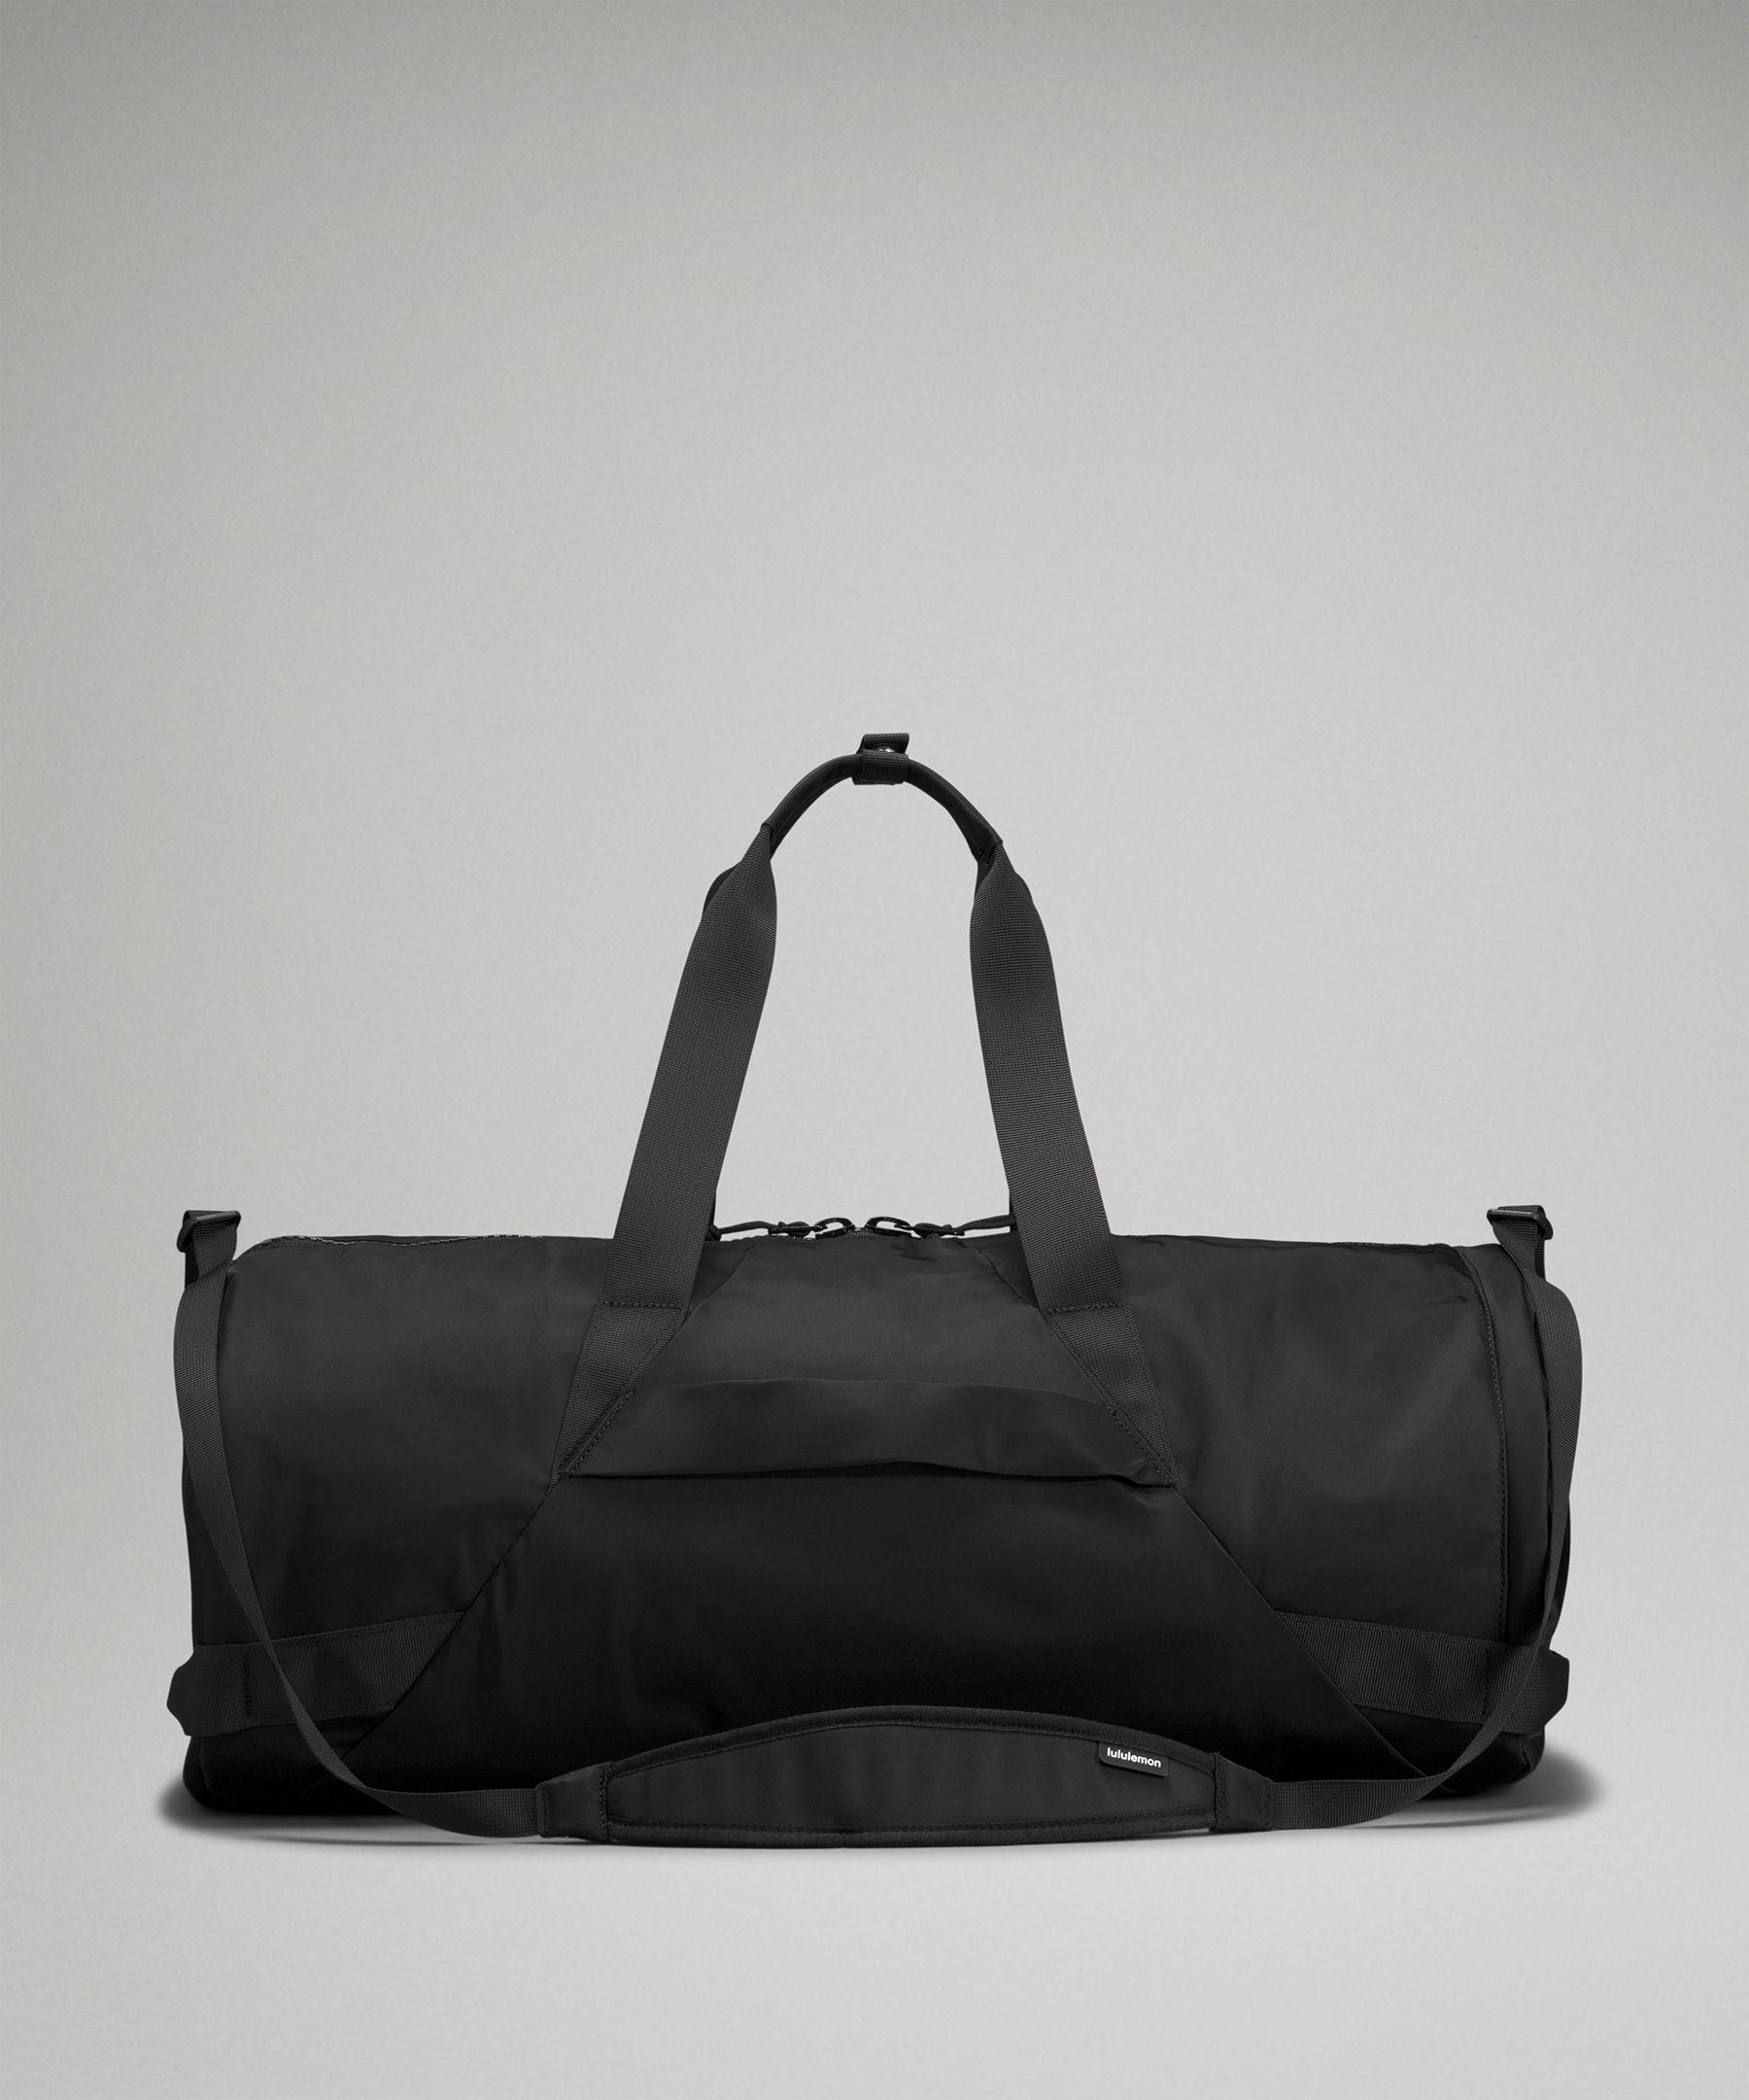 The Duffle Bag